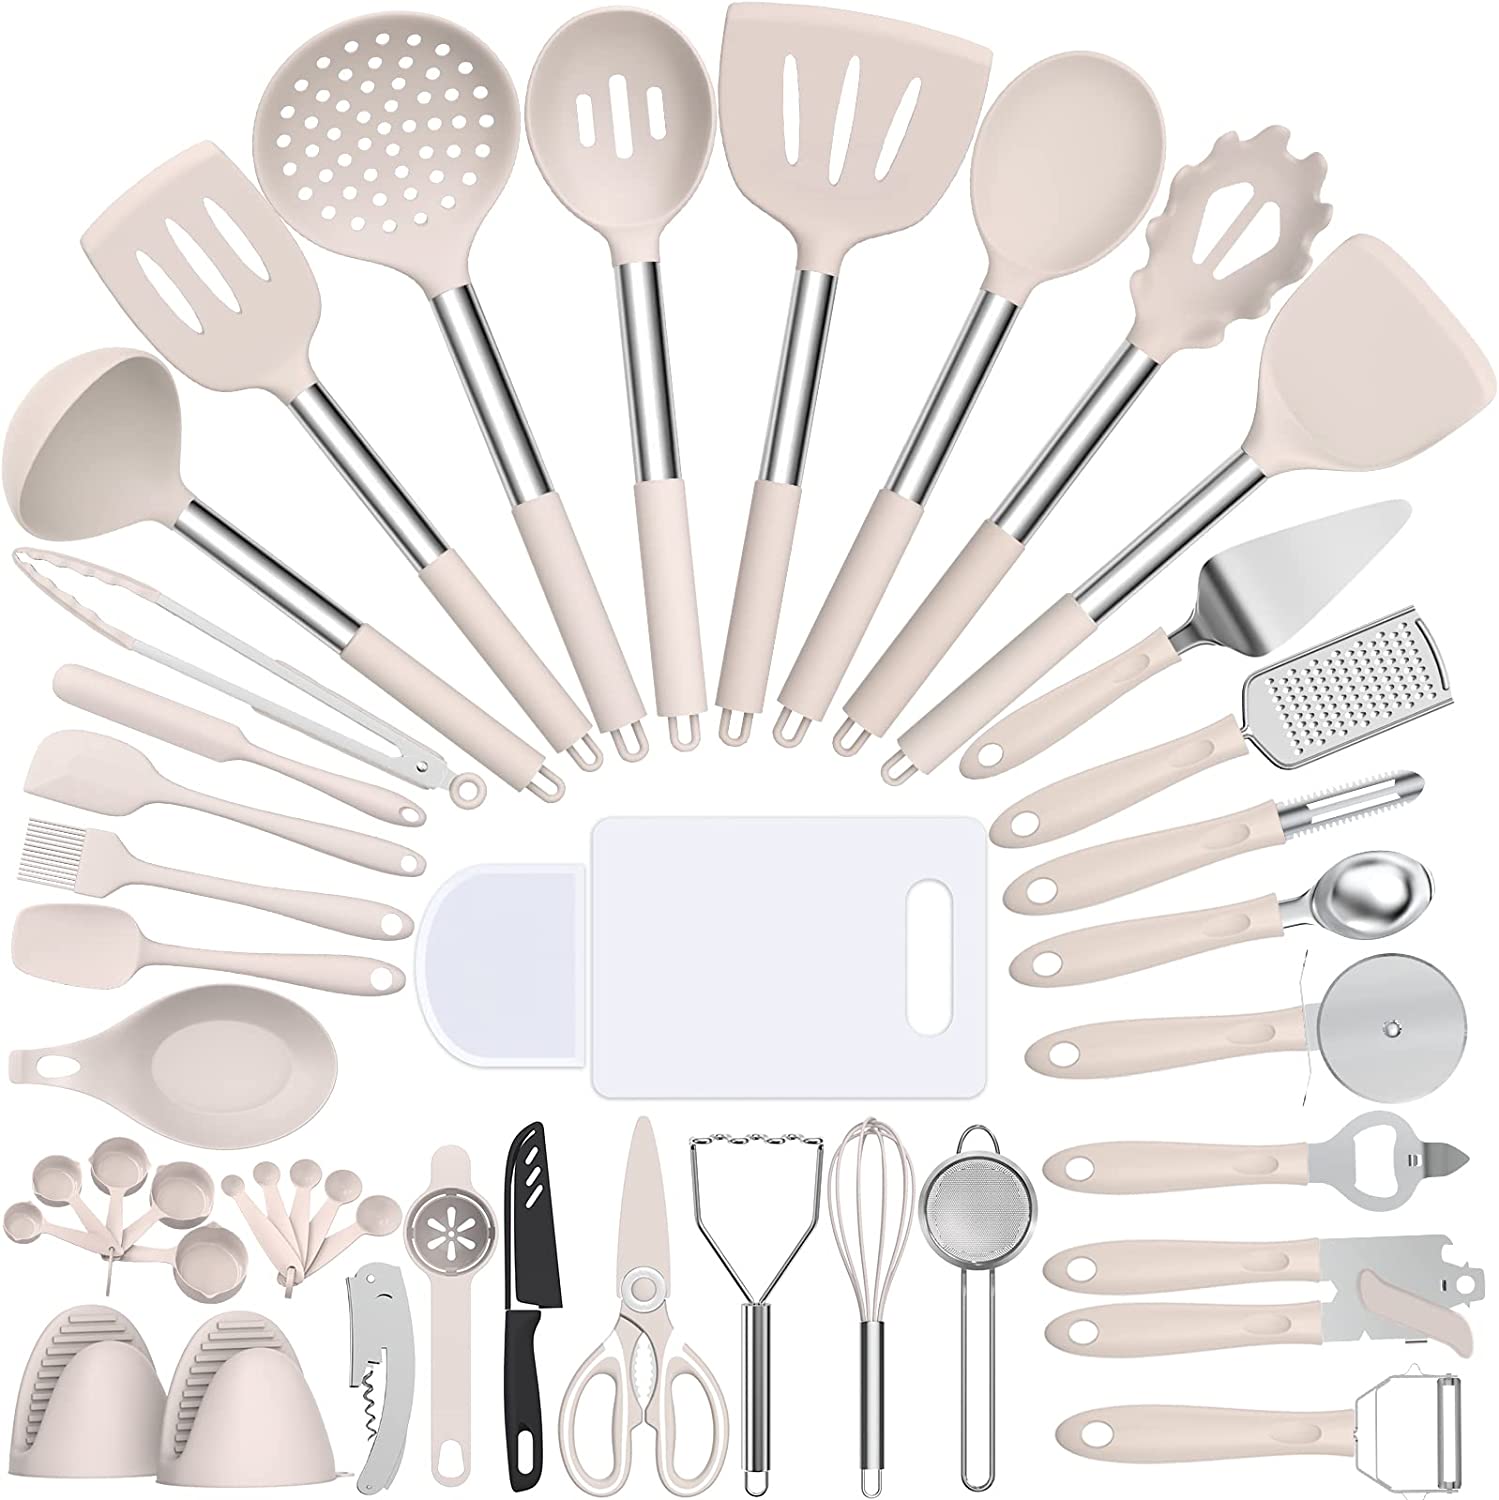 Best utensils for ceramic 43 piece heat resistant set